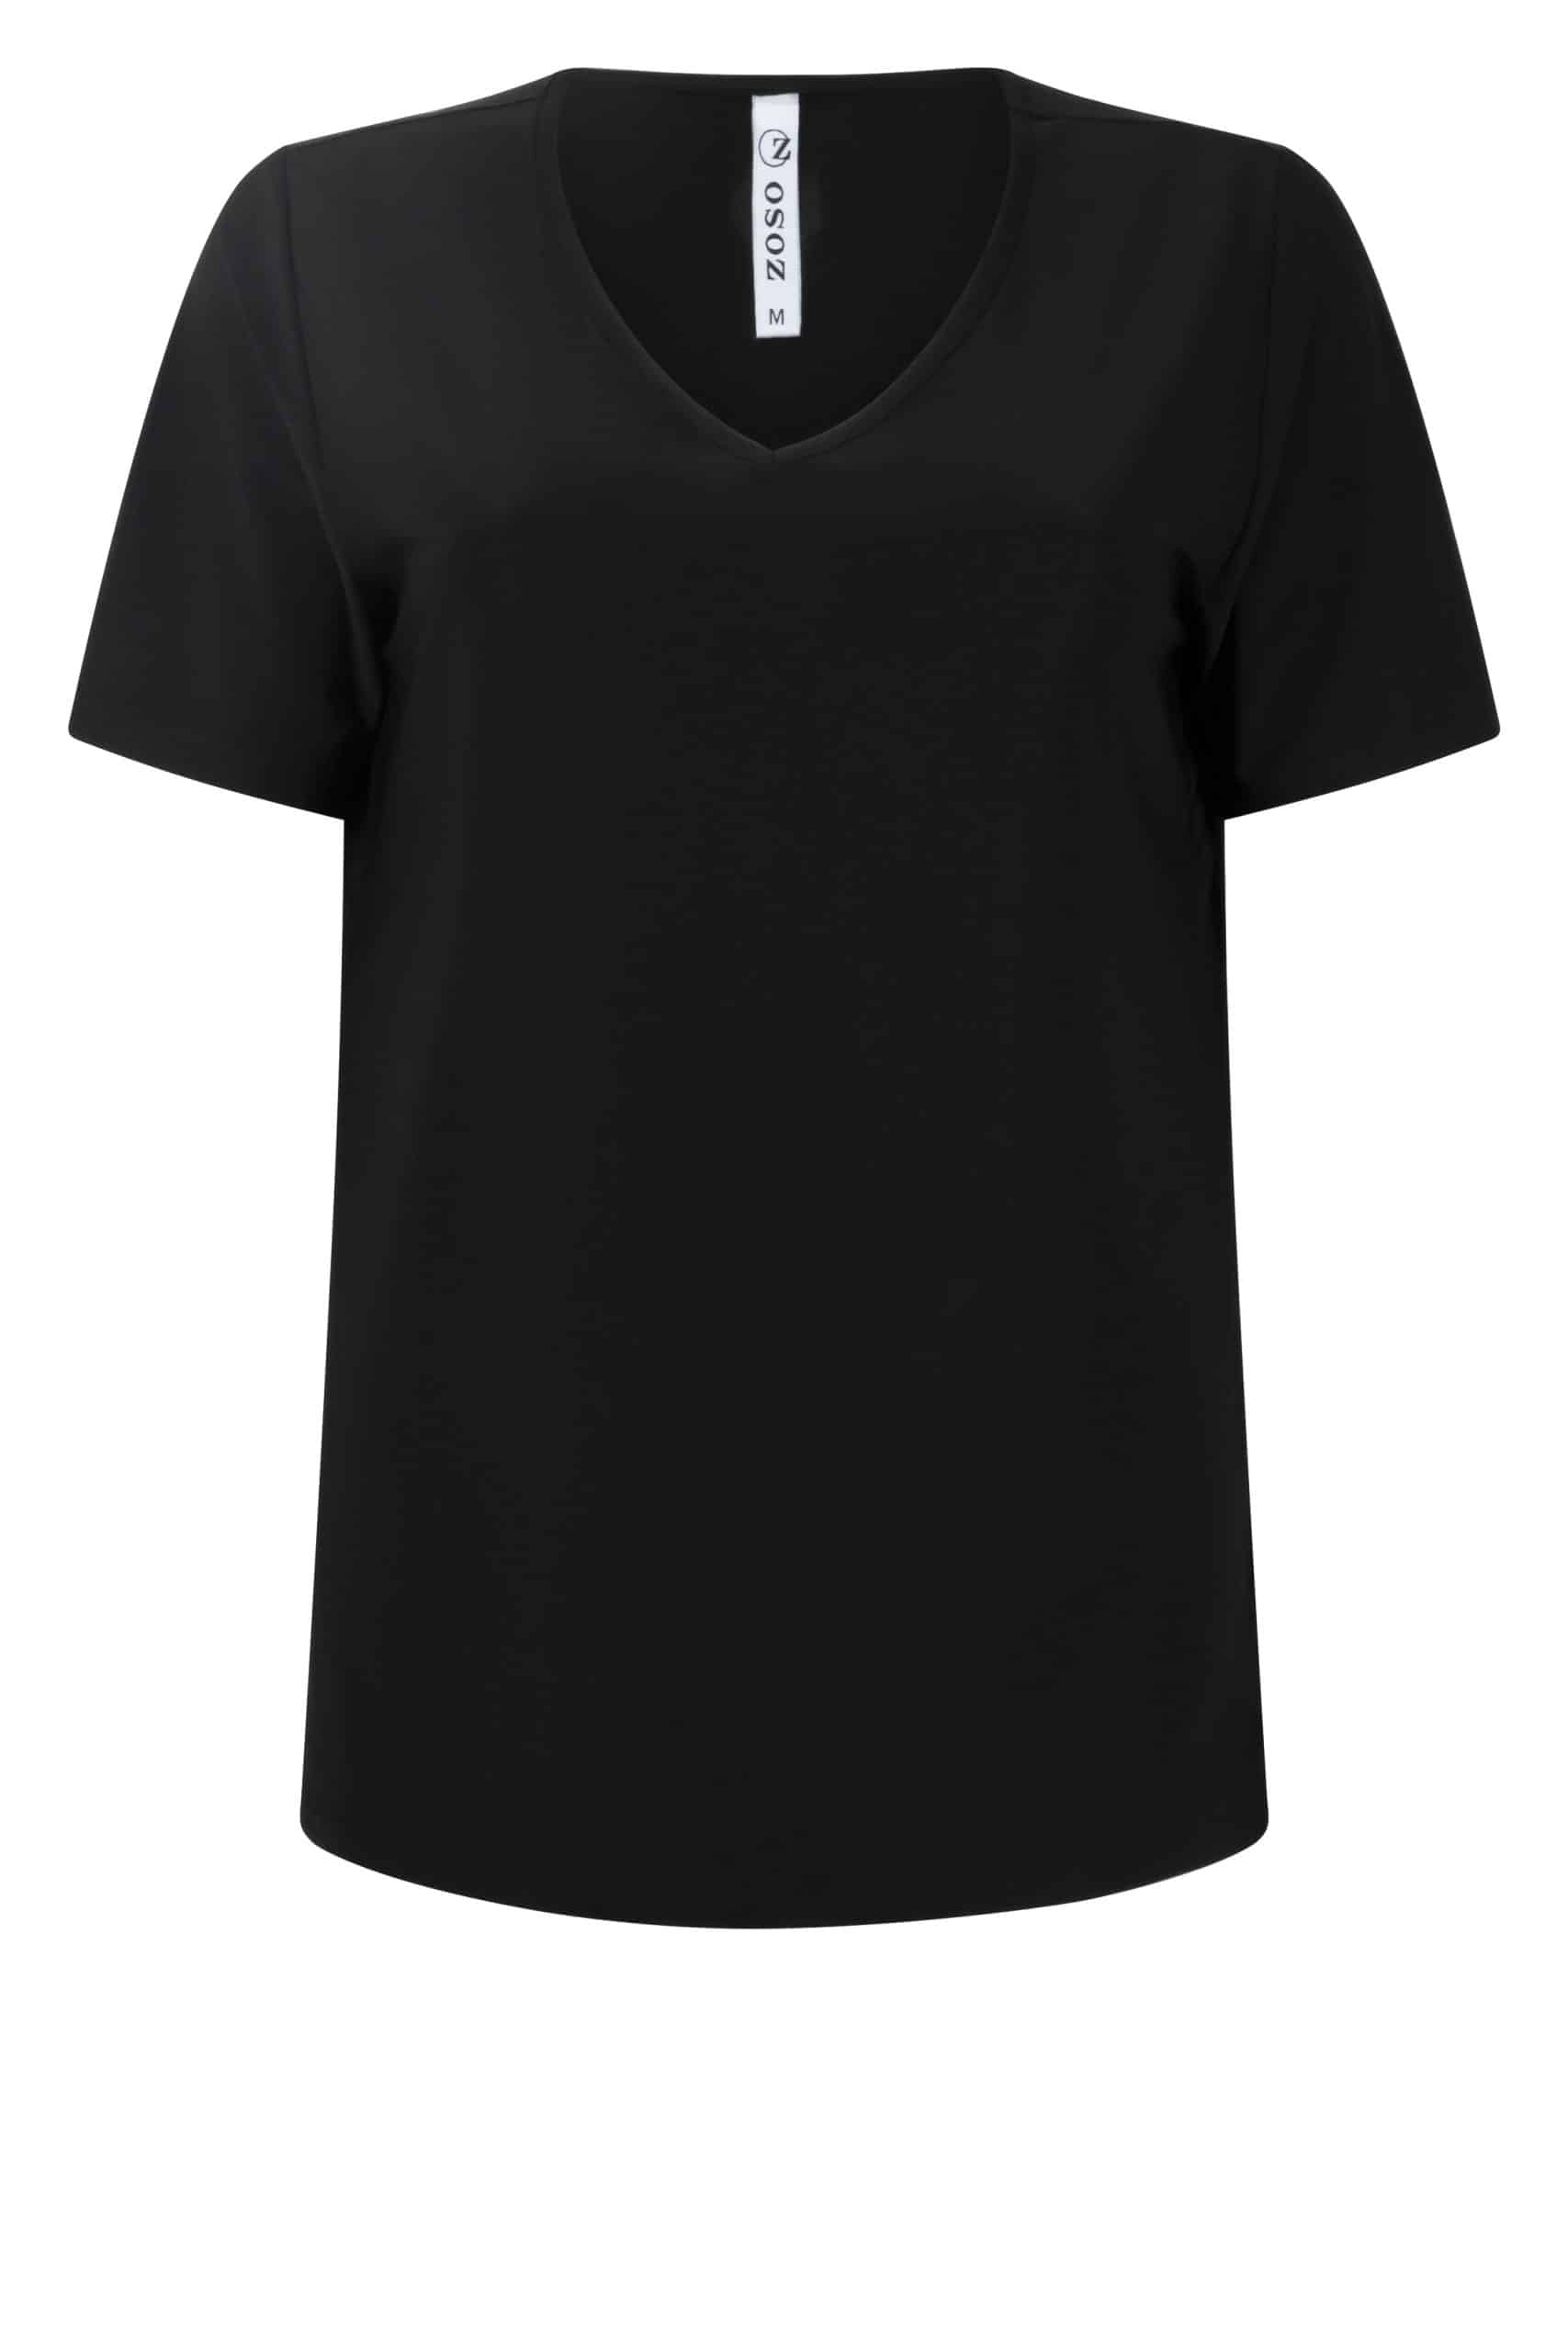 Zoso 224 Biba Splendour Basic Shirt Black